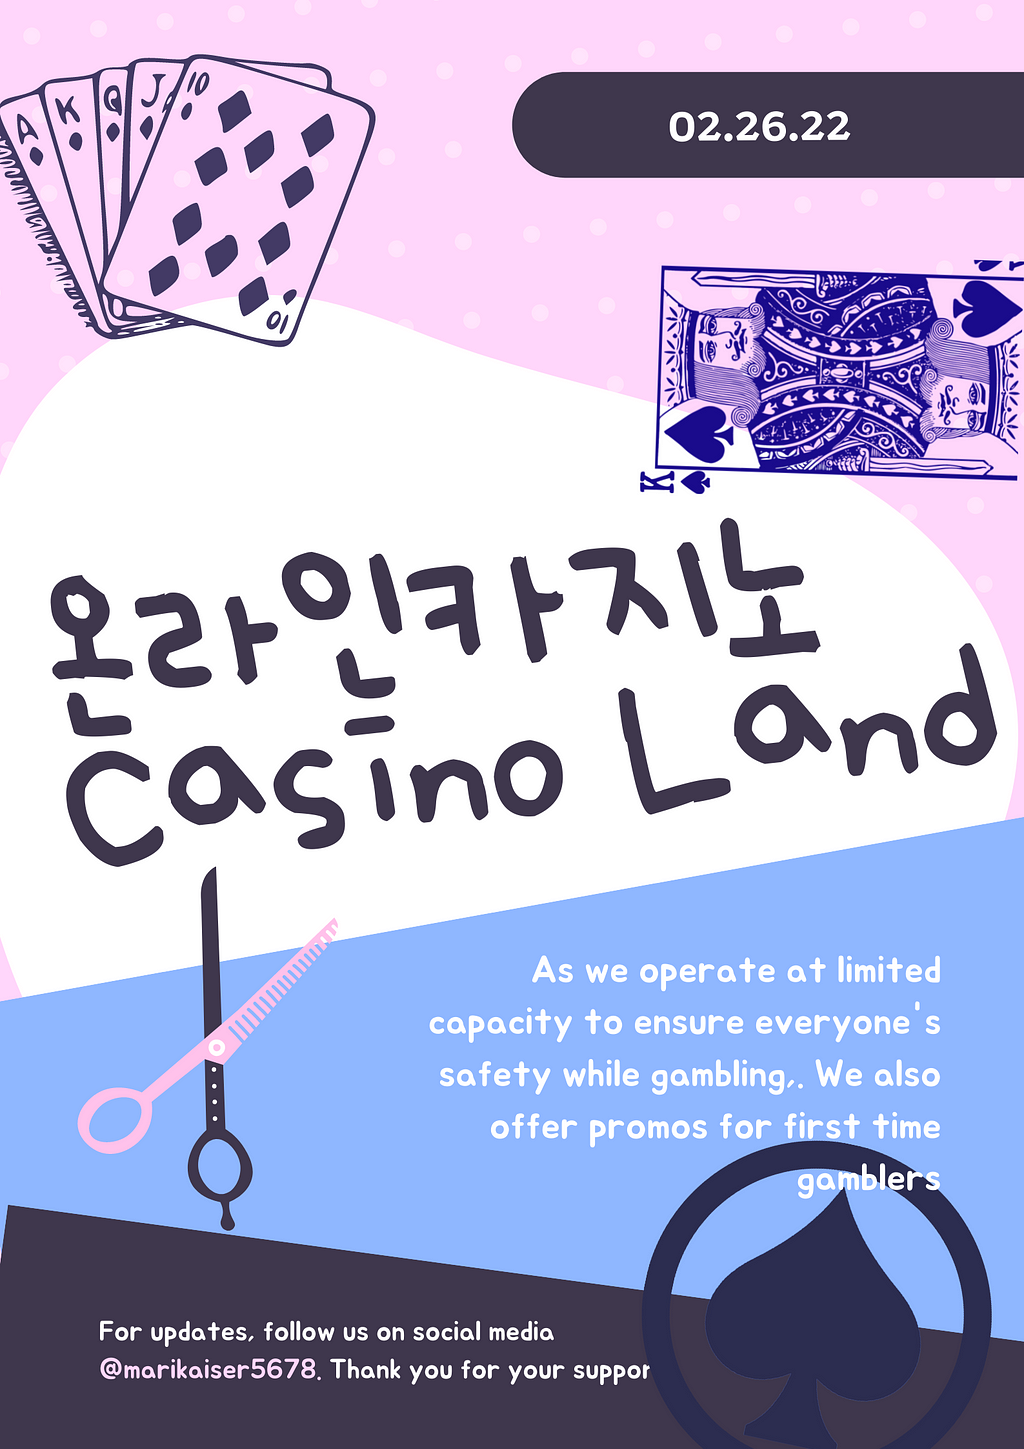 Casino Land (https://kus7.com) website